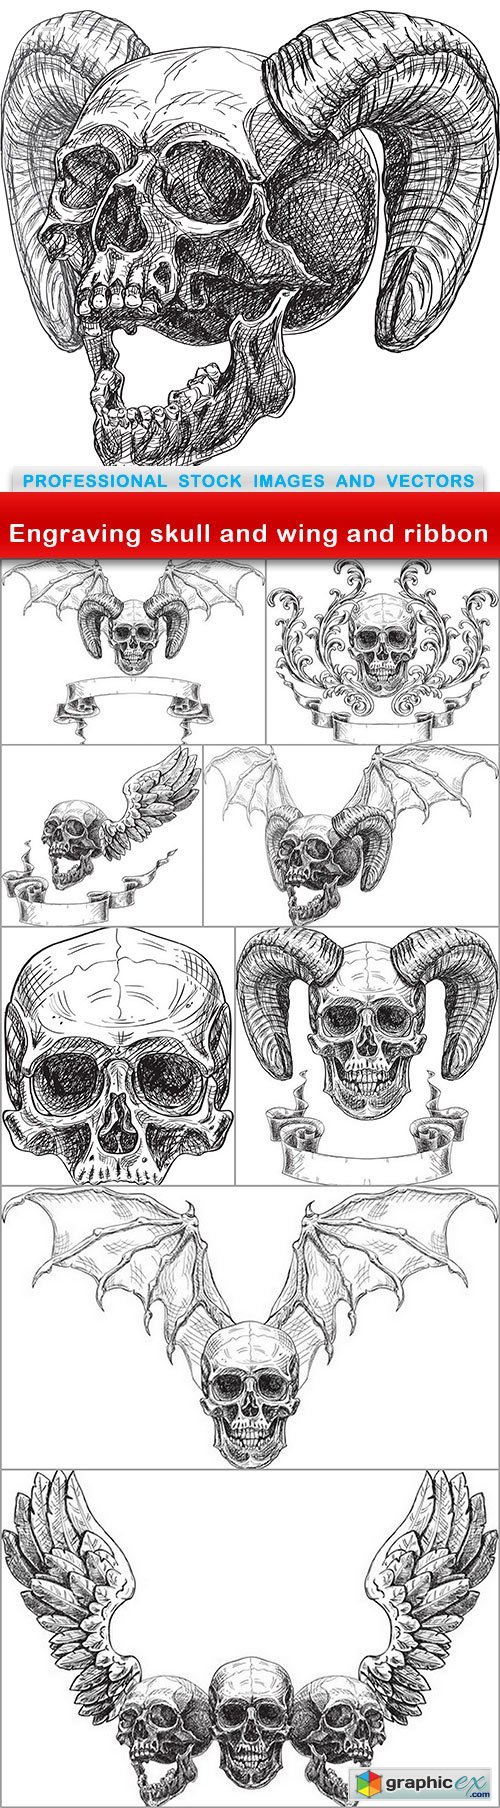 Engraving skull and wing and ribbon - 9 EPS